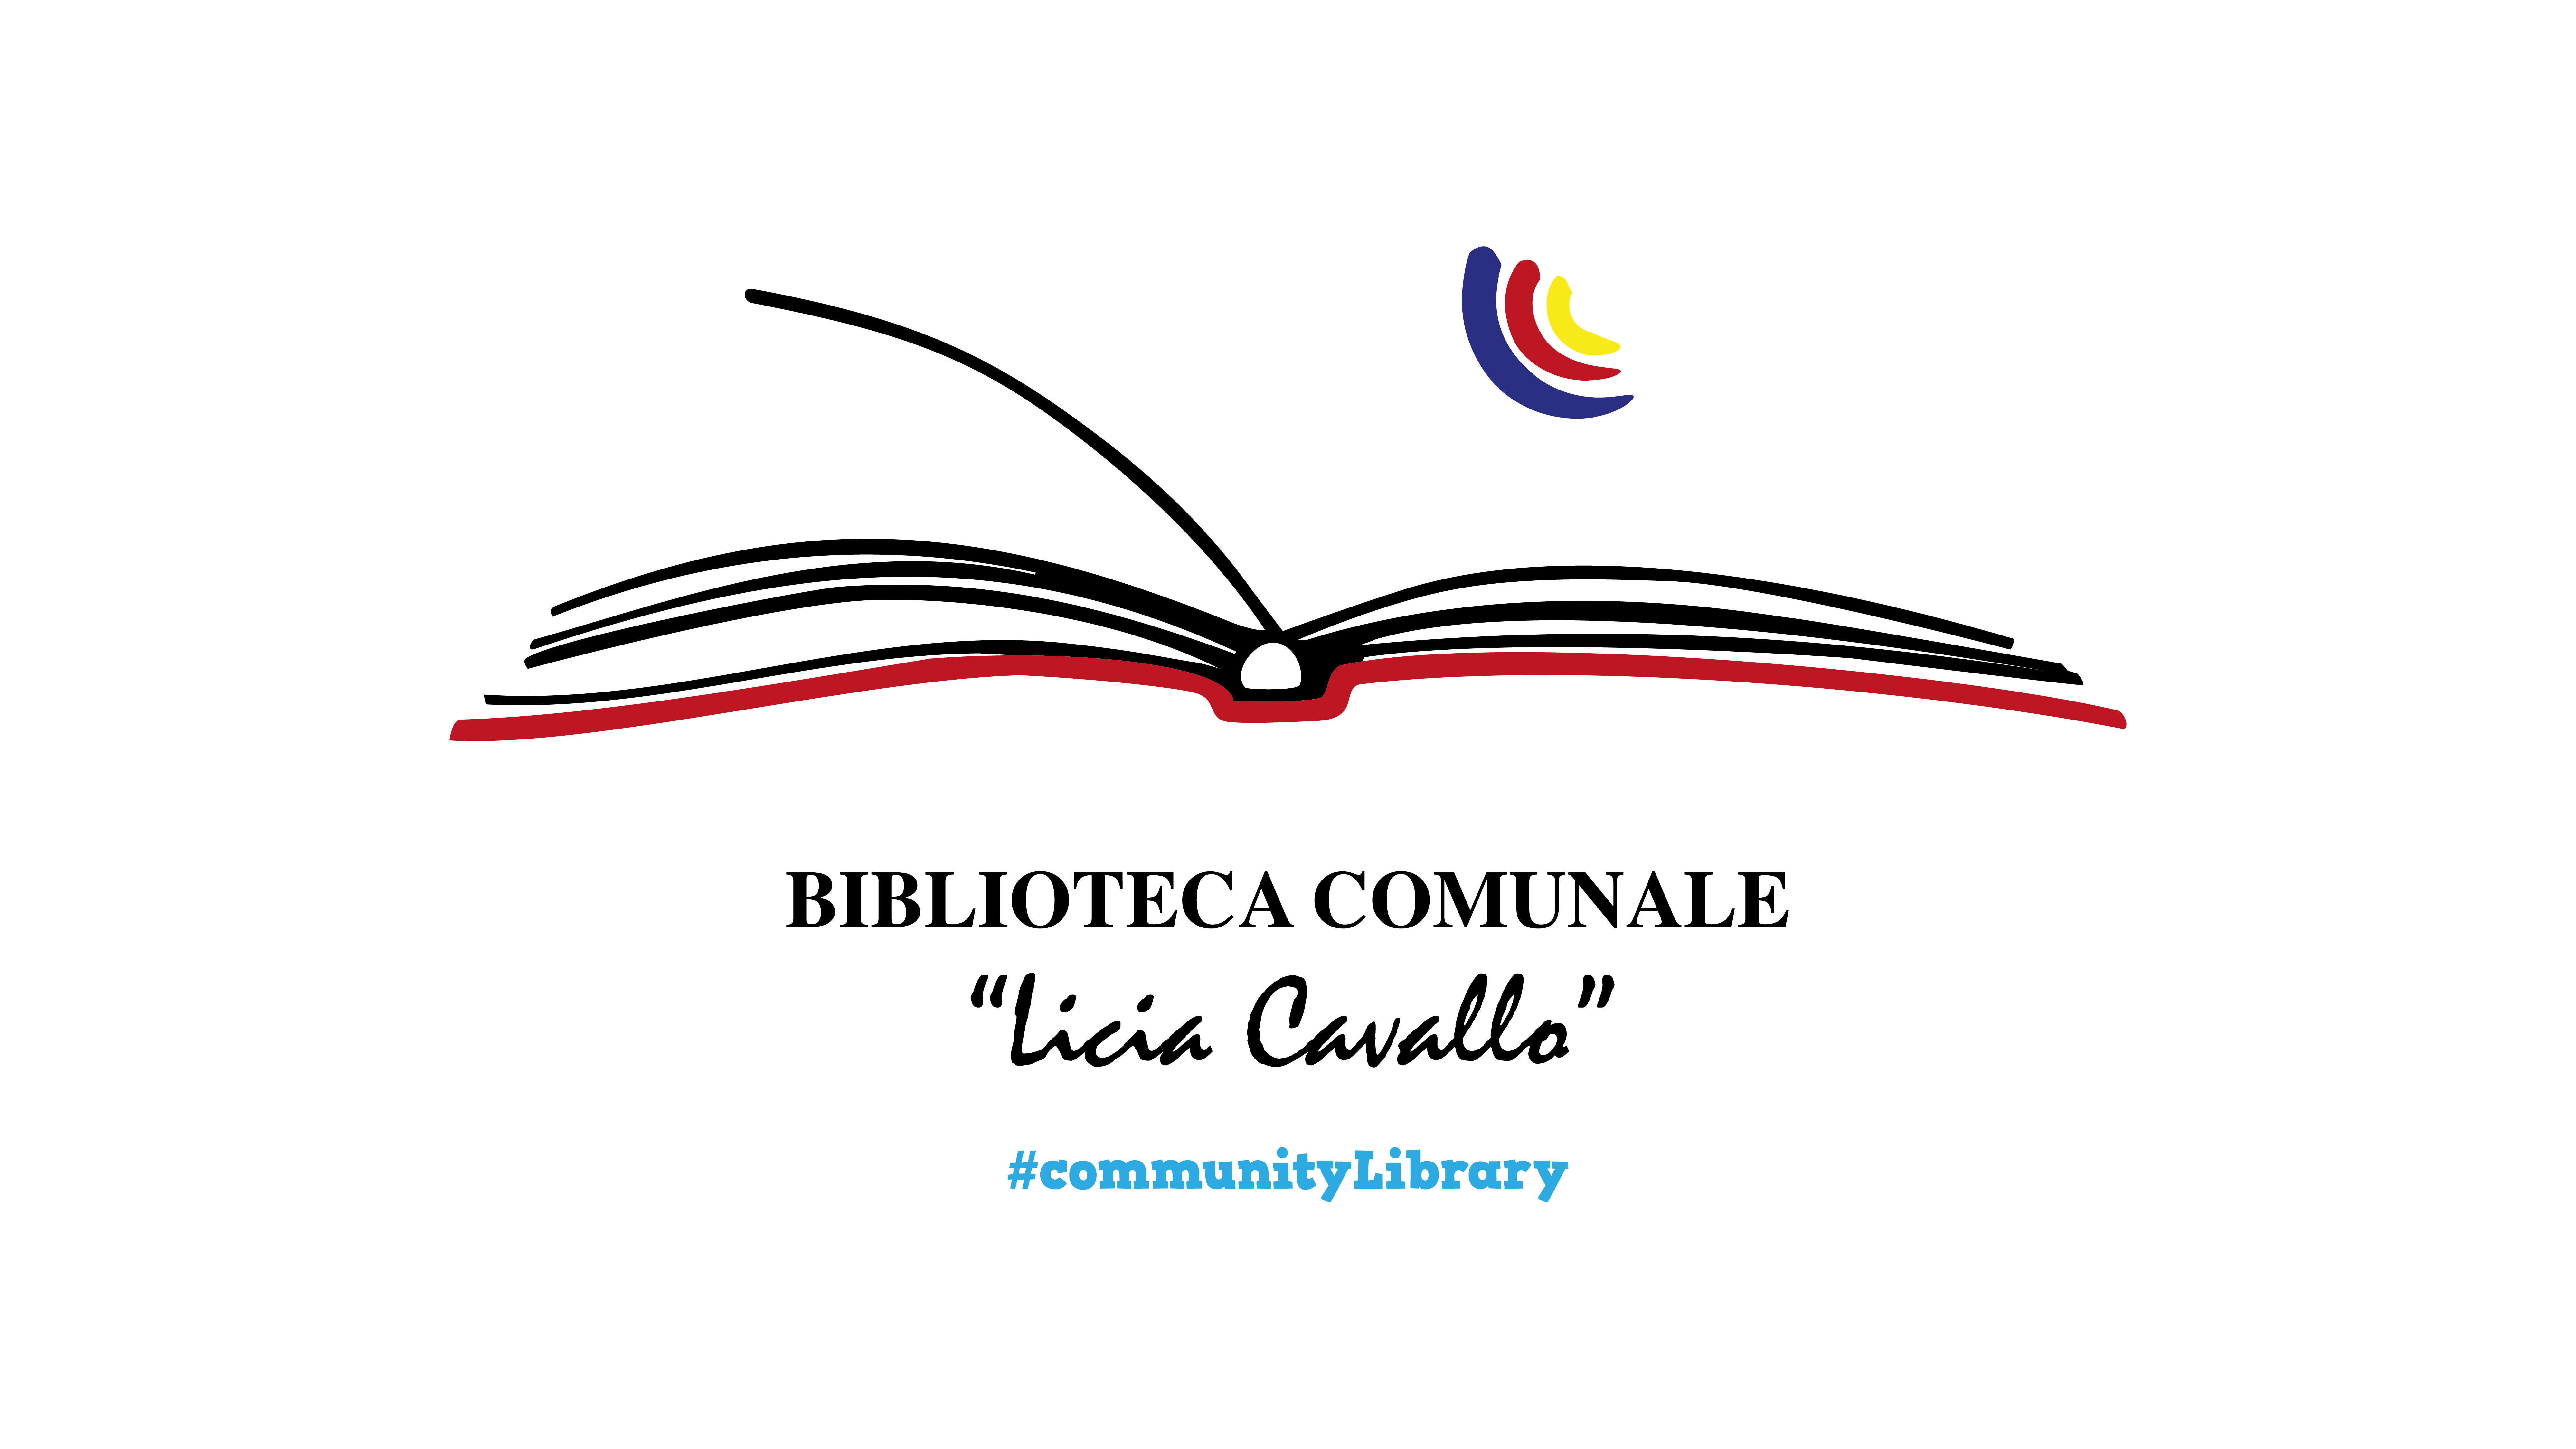 BIBLIOTECA COMUNALE